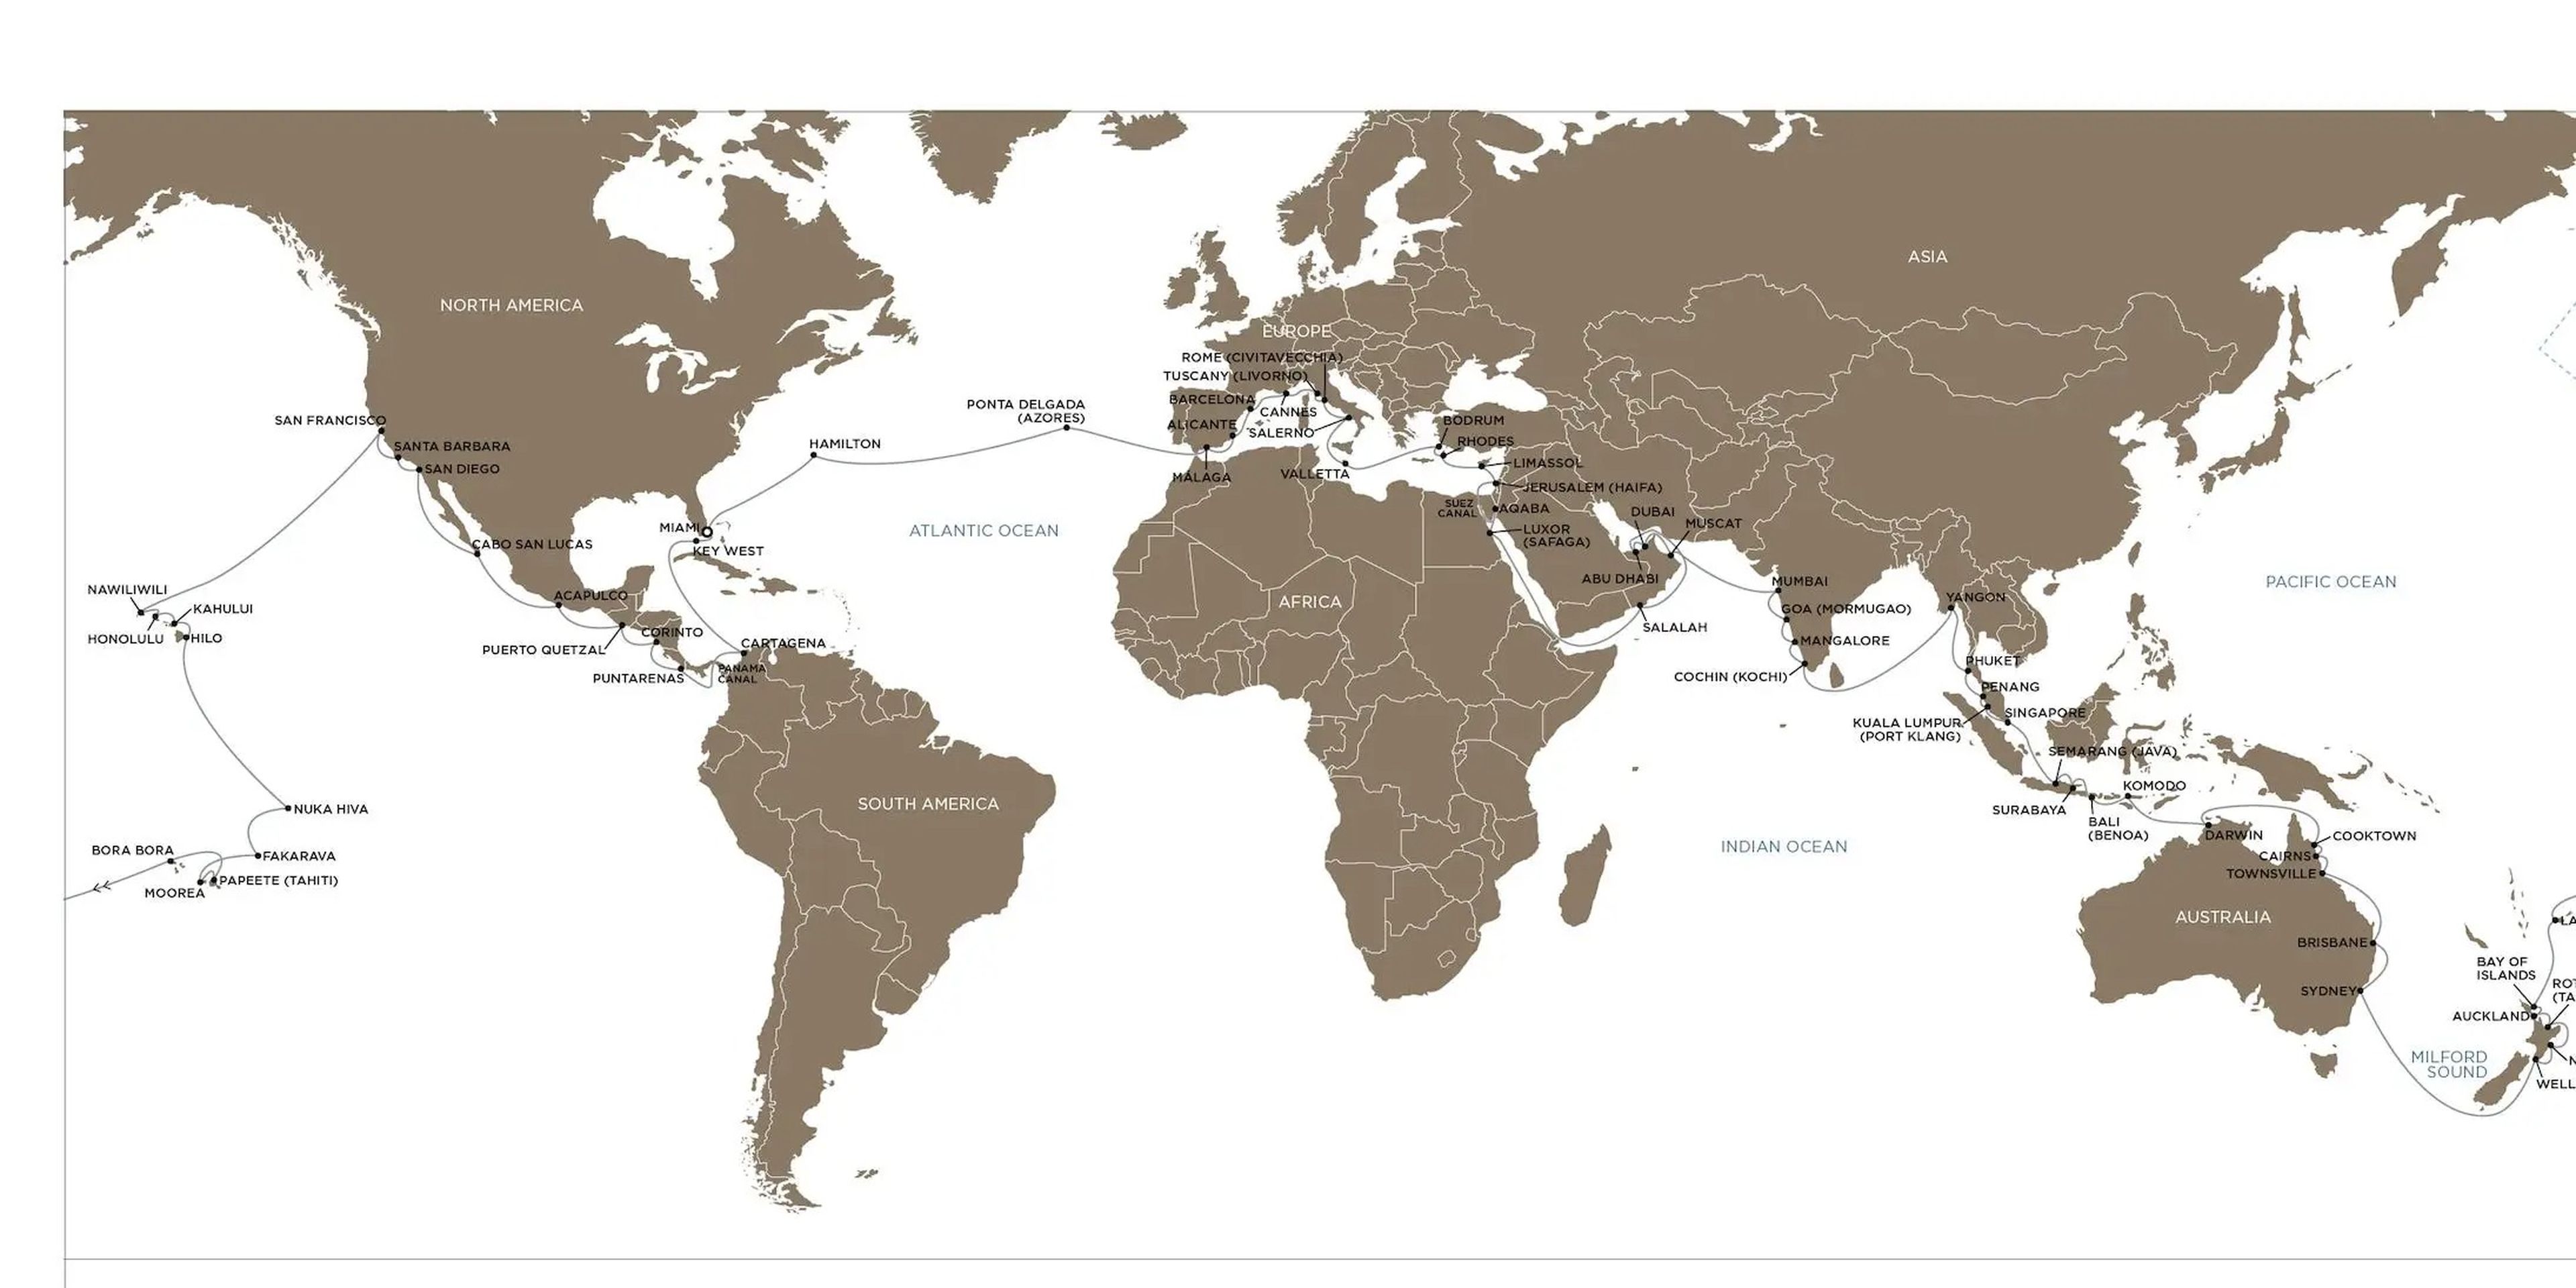 El mapa mundial del crucero.